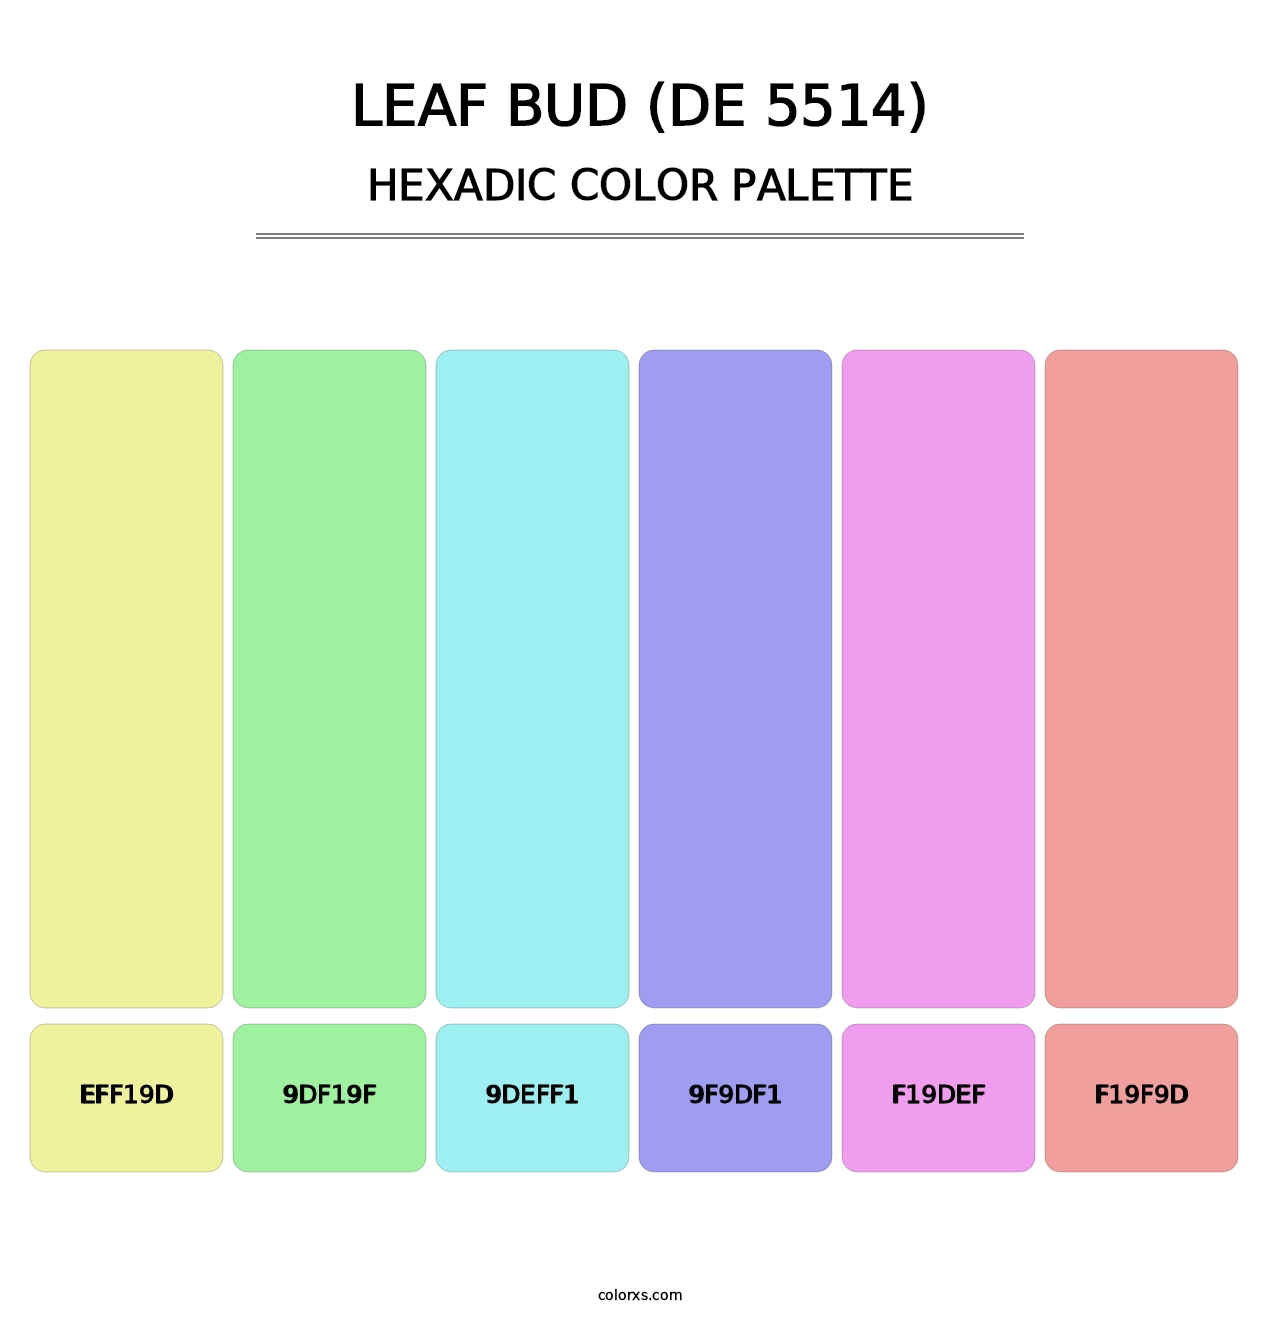 Leaf Bud (DE 5514) - Hexadic Color Palette